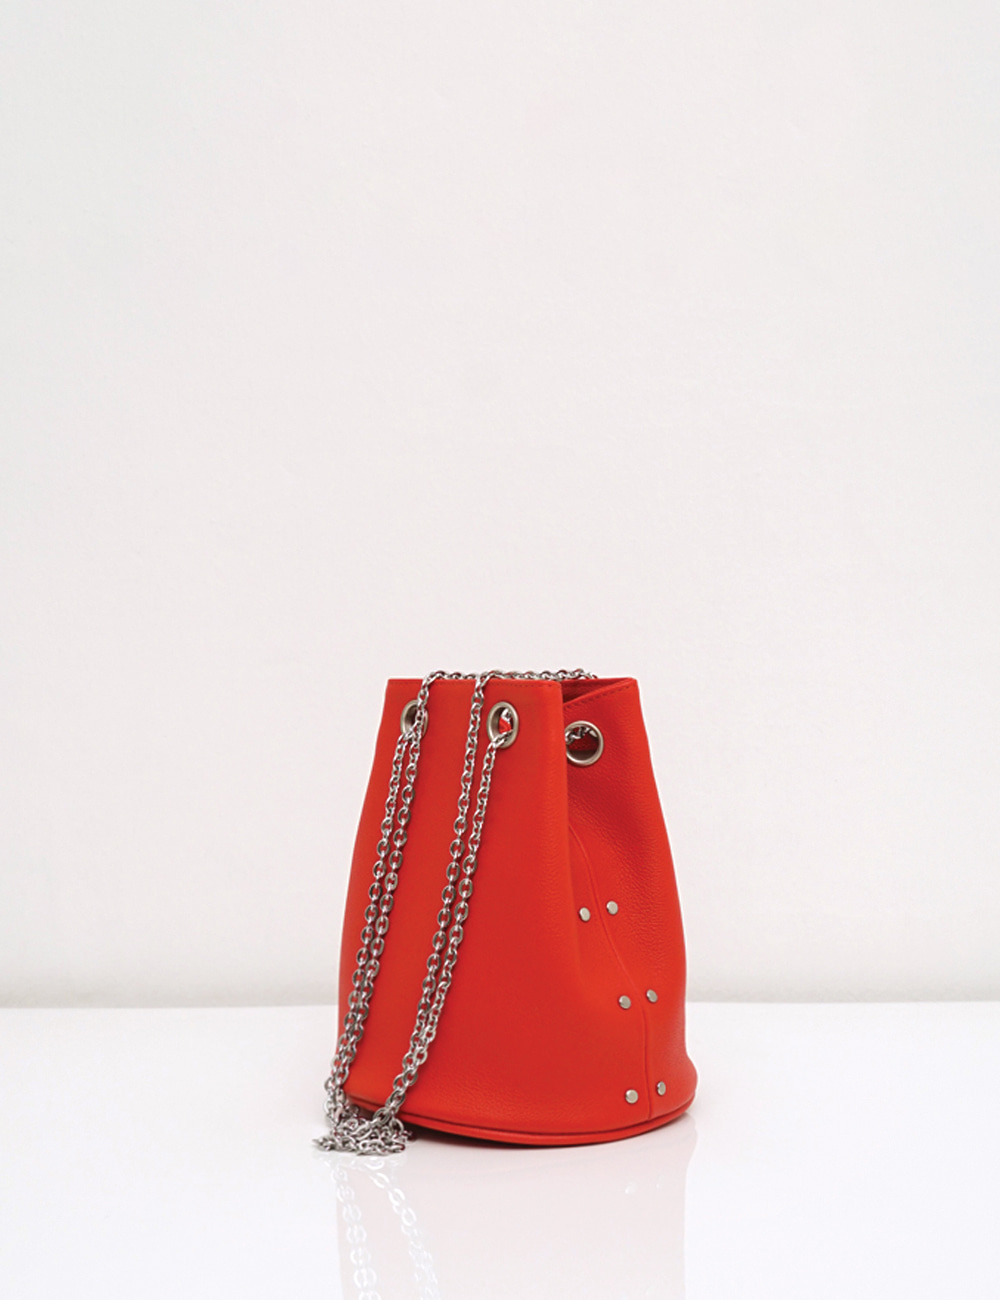 12mini chain bag / red